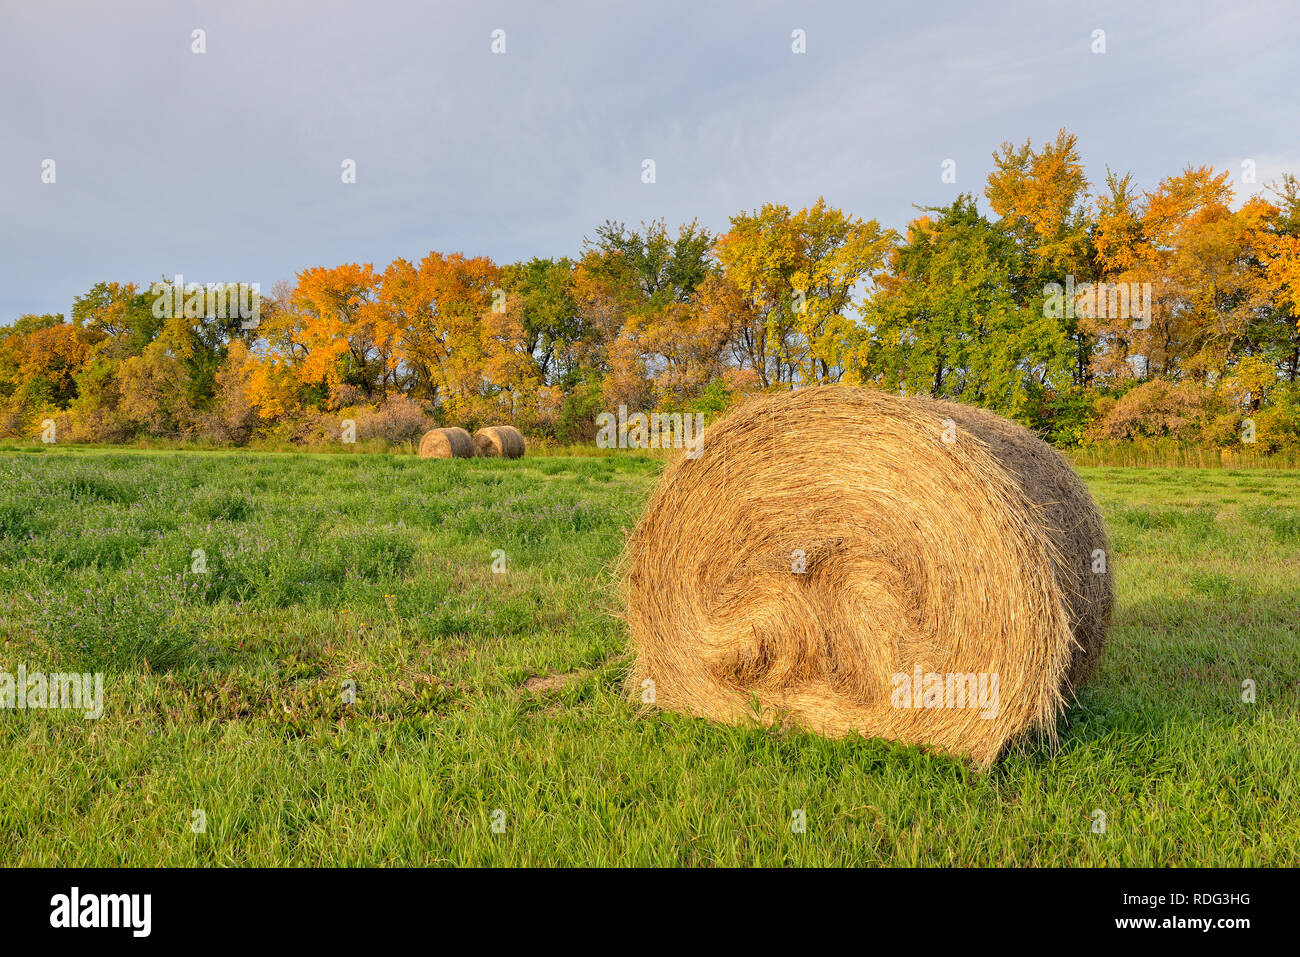 Hay rolls in autumn, Indian Head, Saskatchewan, Canada Stock Photo